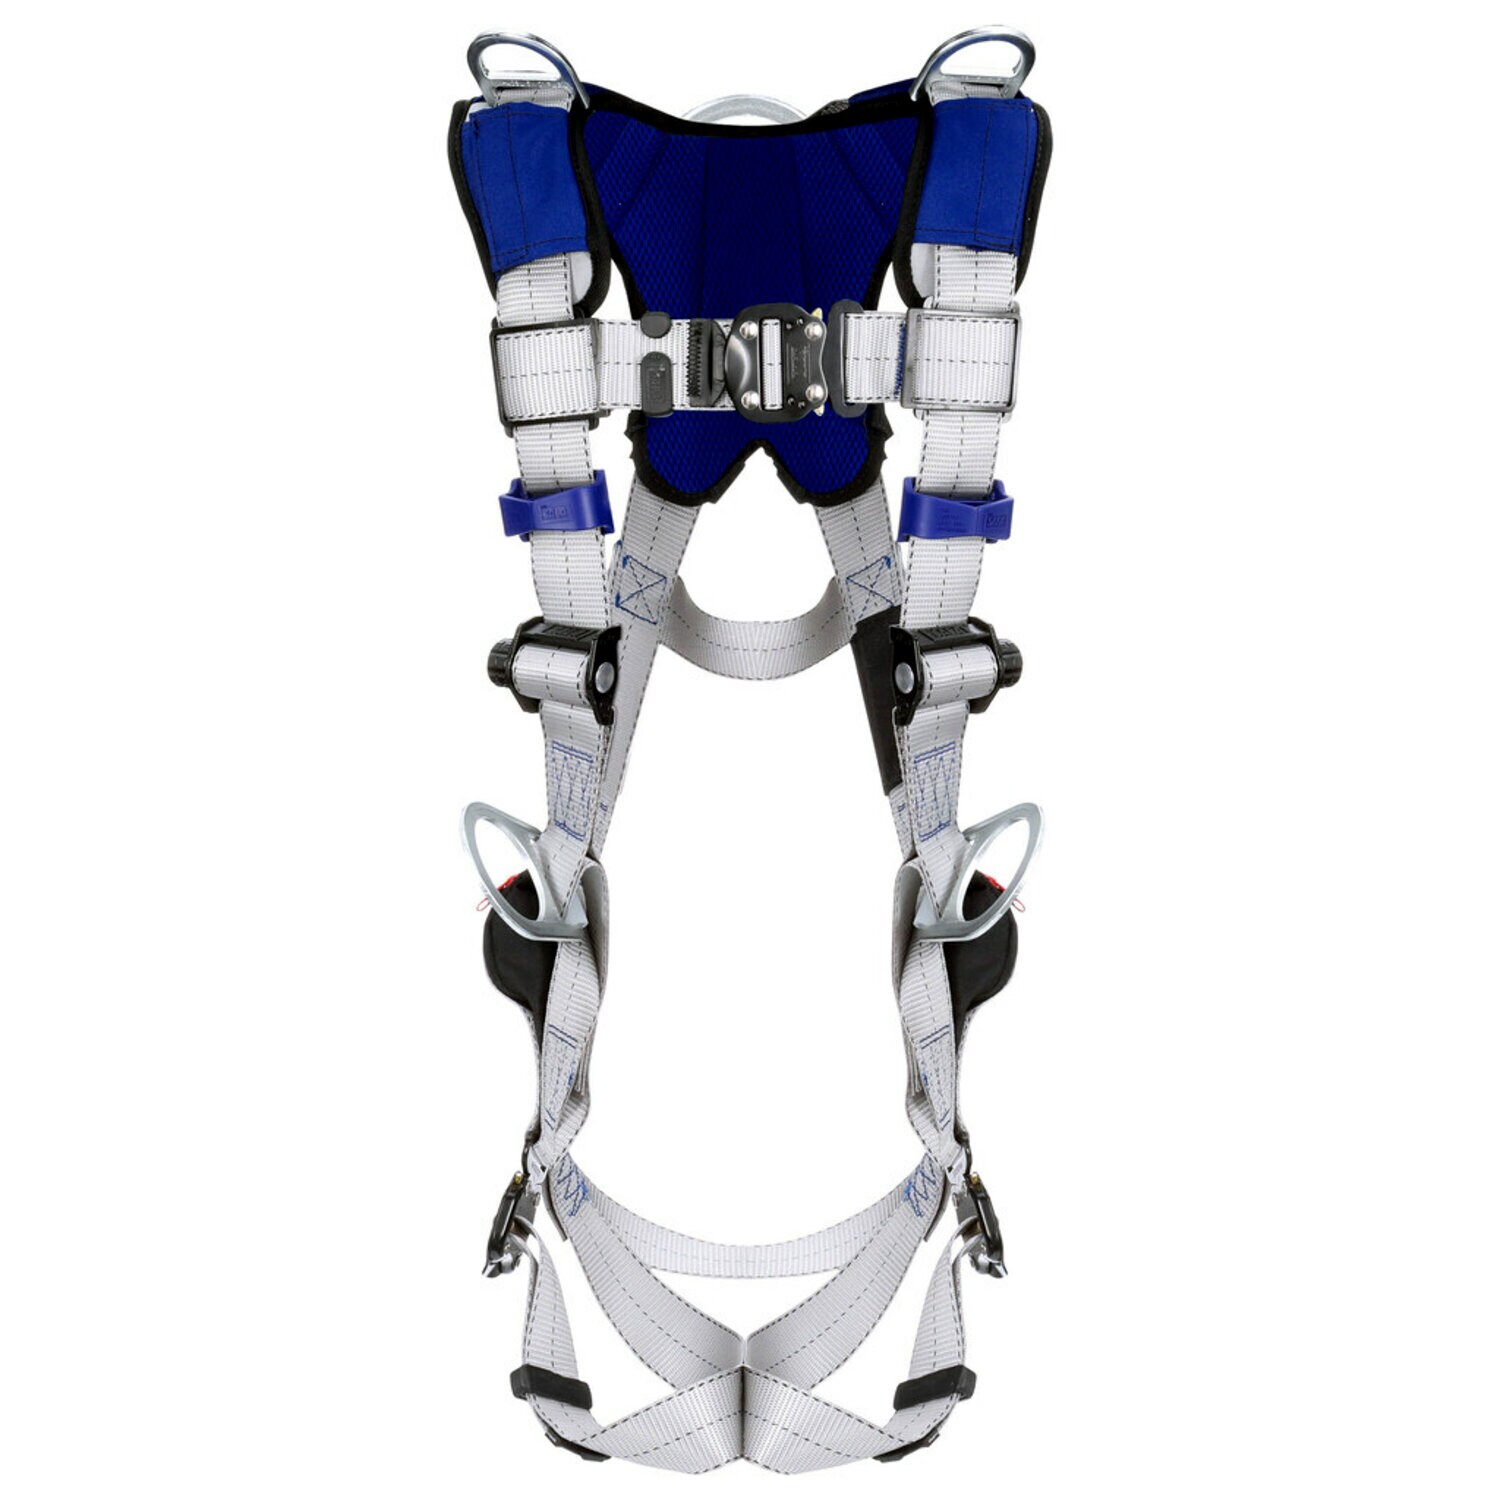 7012817705 - 3M DBI-SALA ExoFit X100 Comfort Vest Positoning/Retrieval Safety Harness 1401224, Large